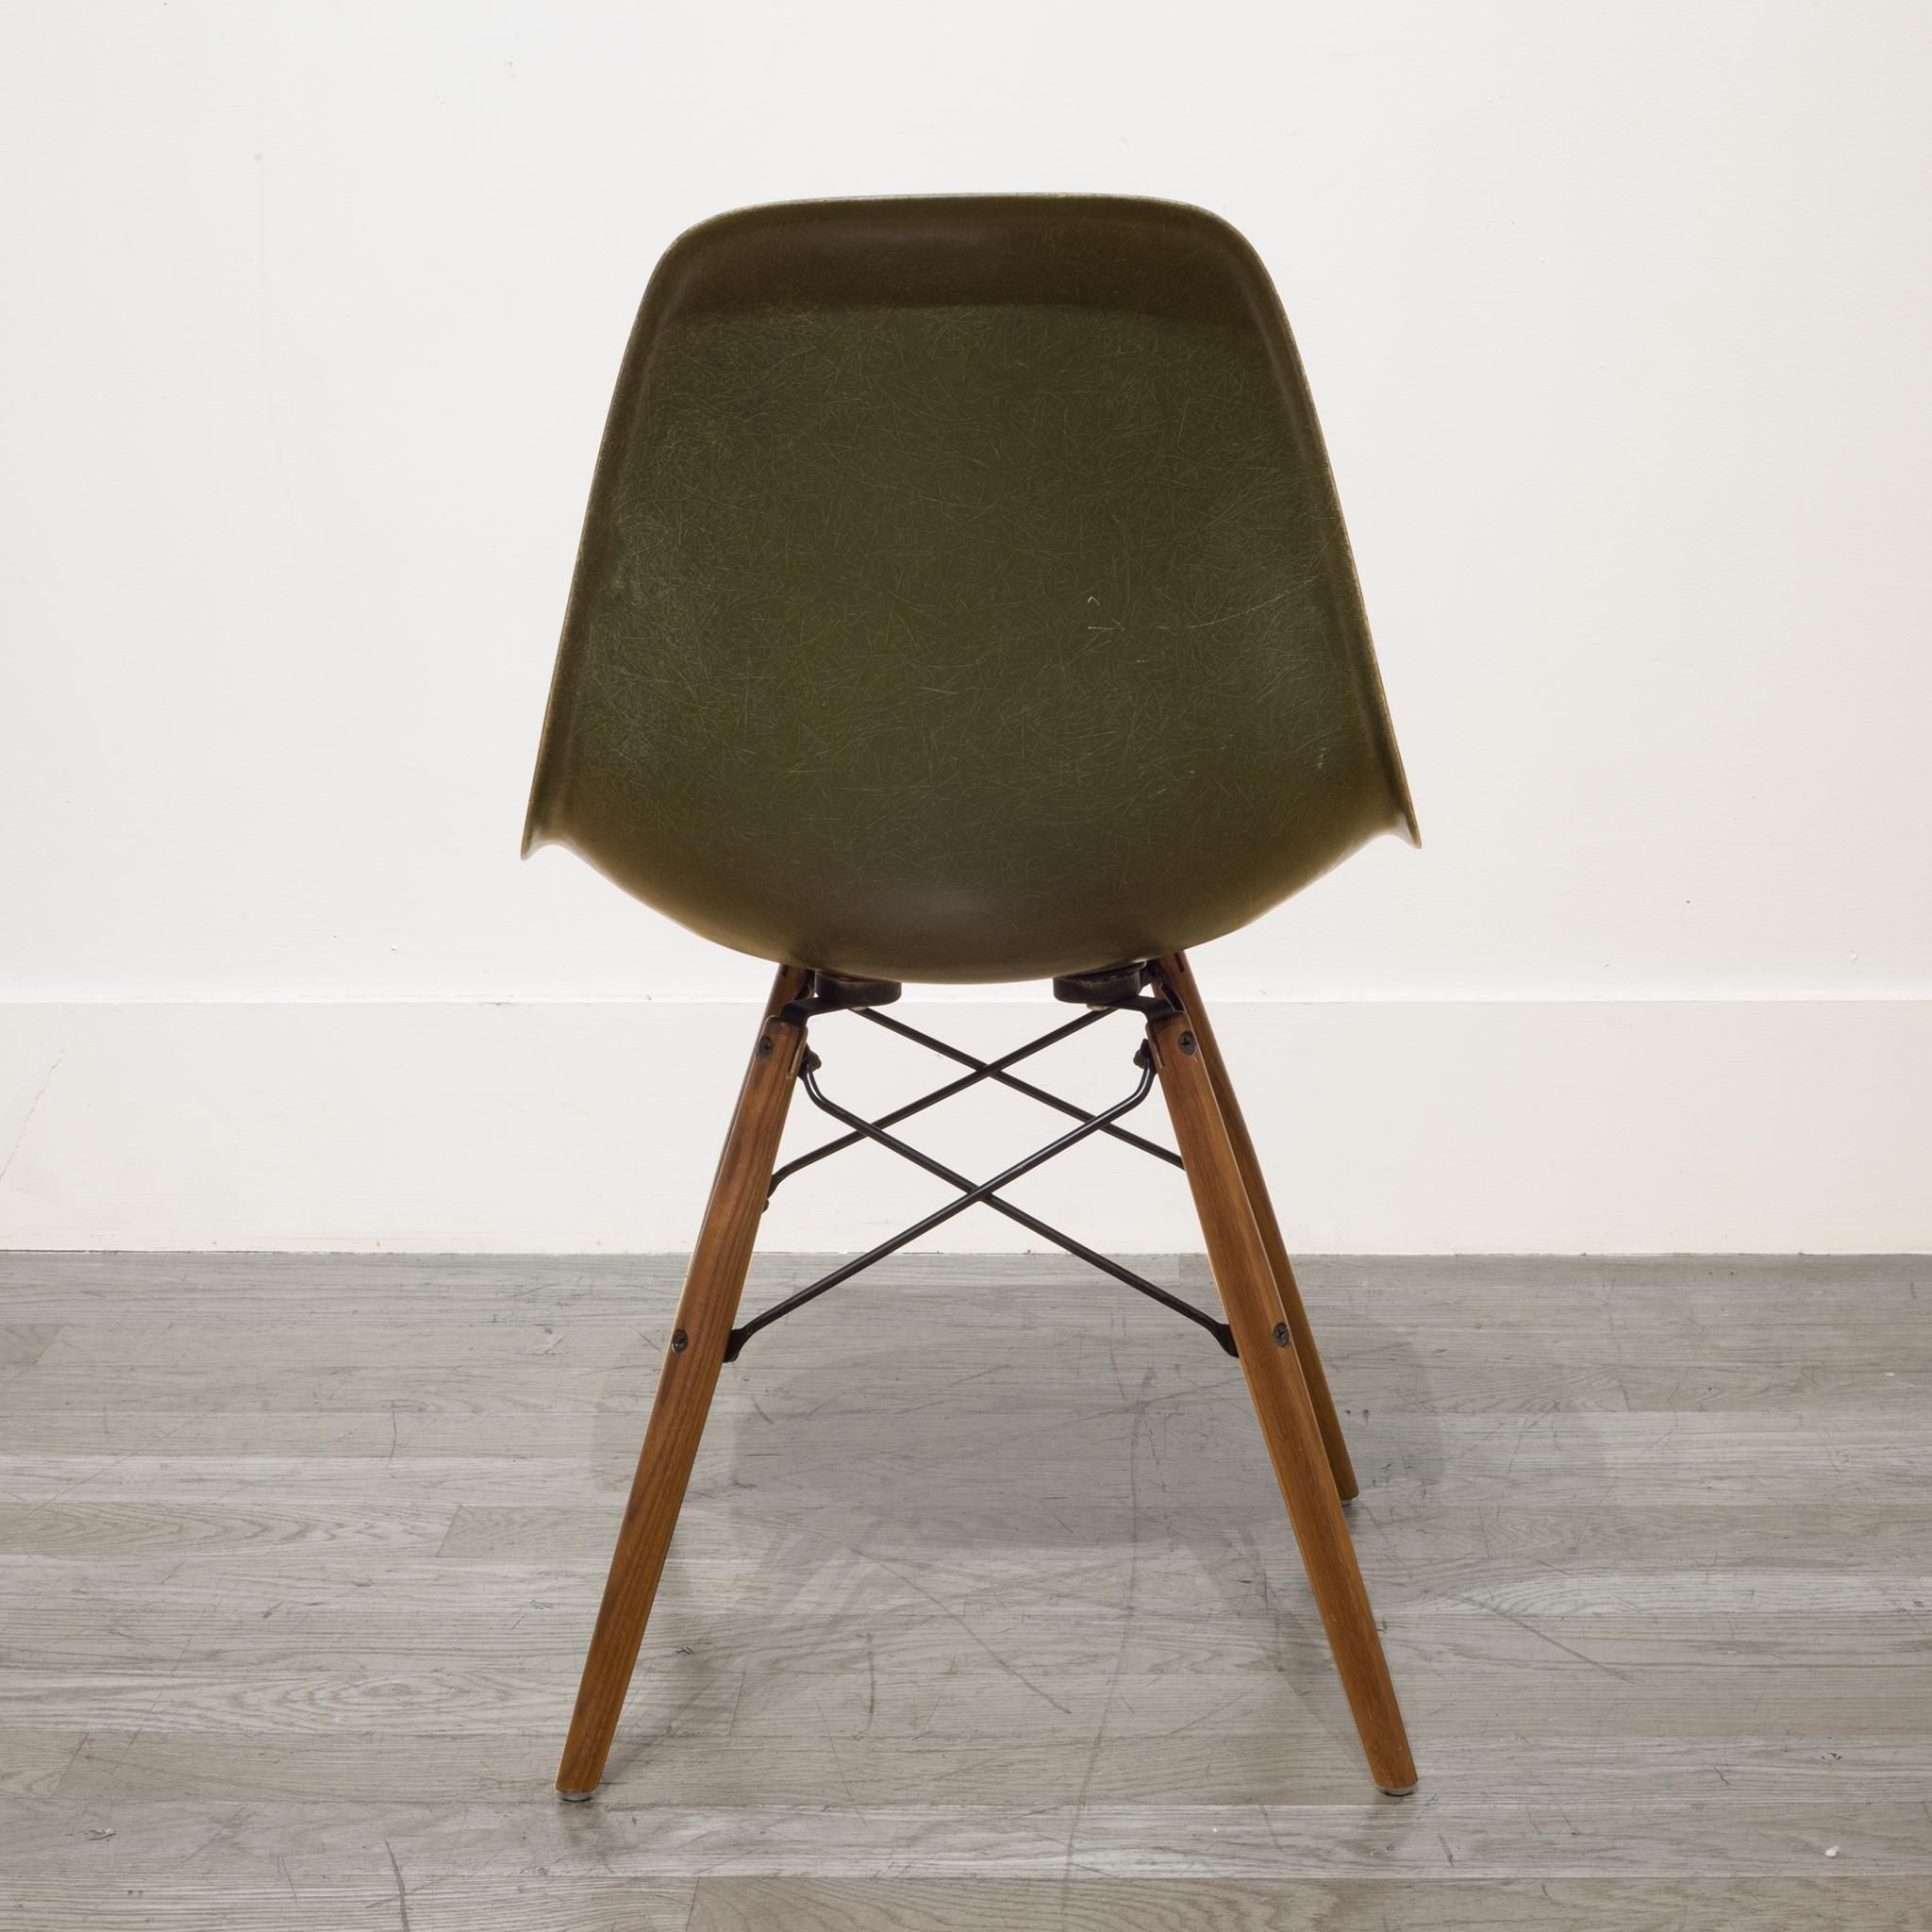 Mid-Century Modern Eames for Herman Miller Fiberglass Shell Chair in Sea Foam Green , c. 1958-1965